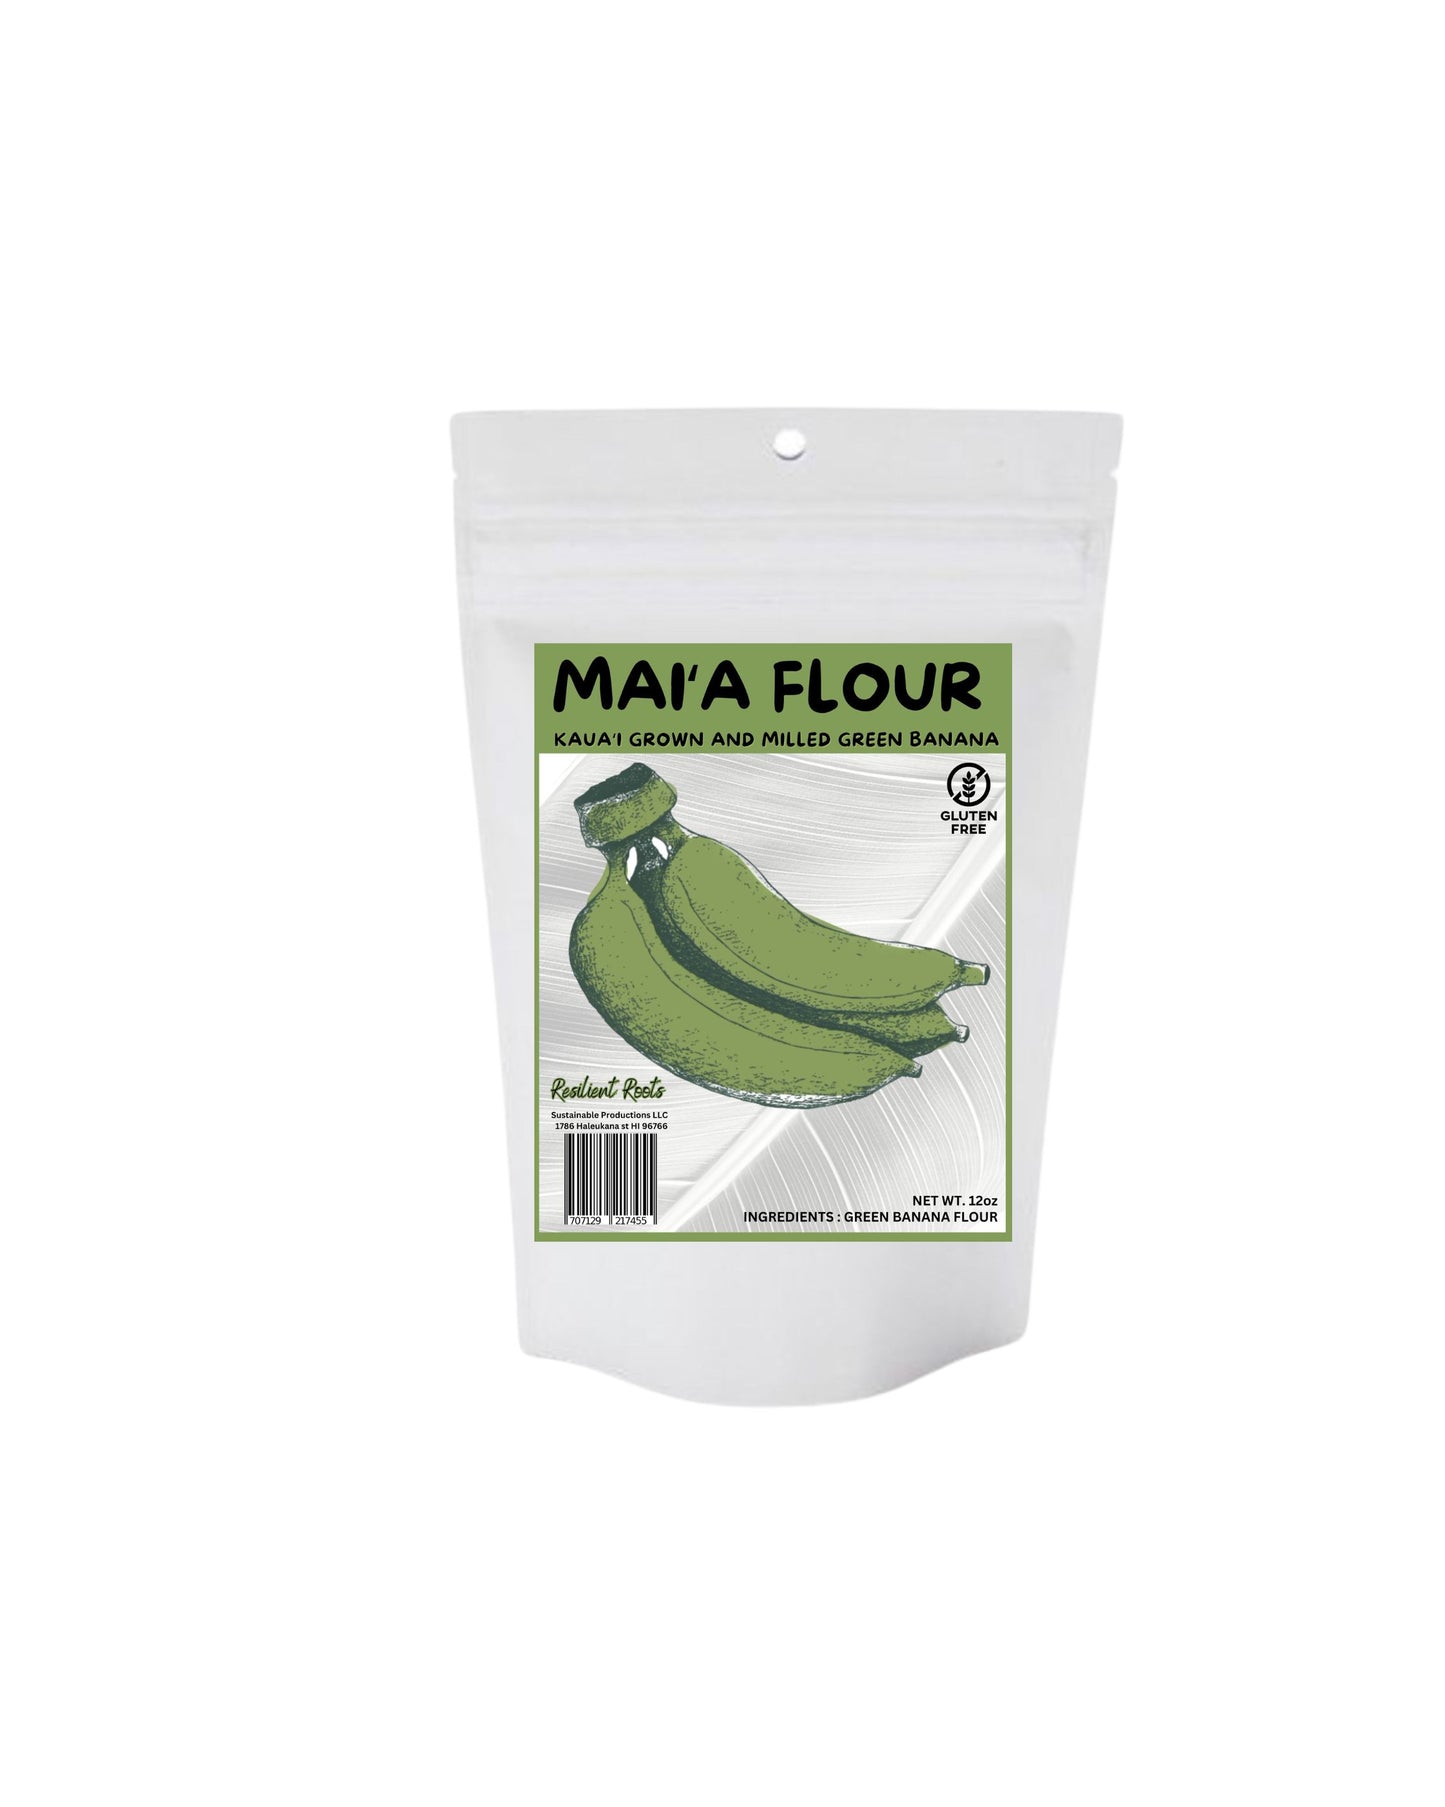 12oz Green Banana (Maia) Island Flour - Gluten-Free, Low-Carb, Rich in Vitamins